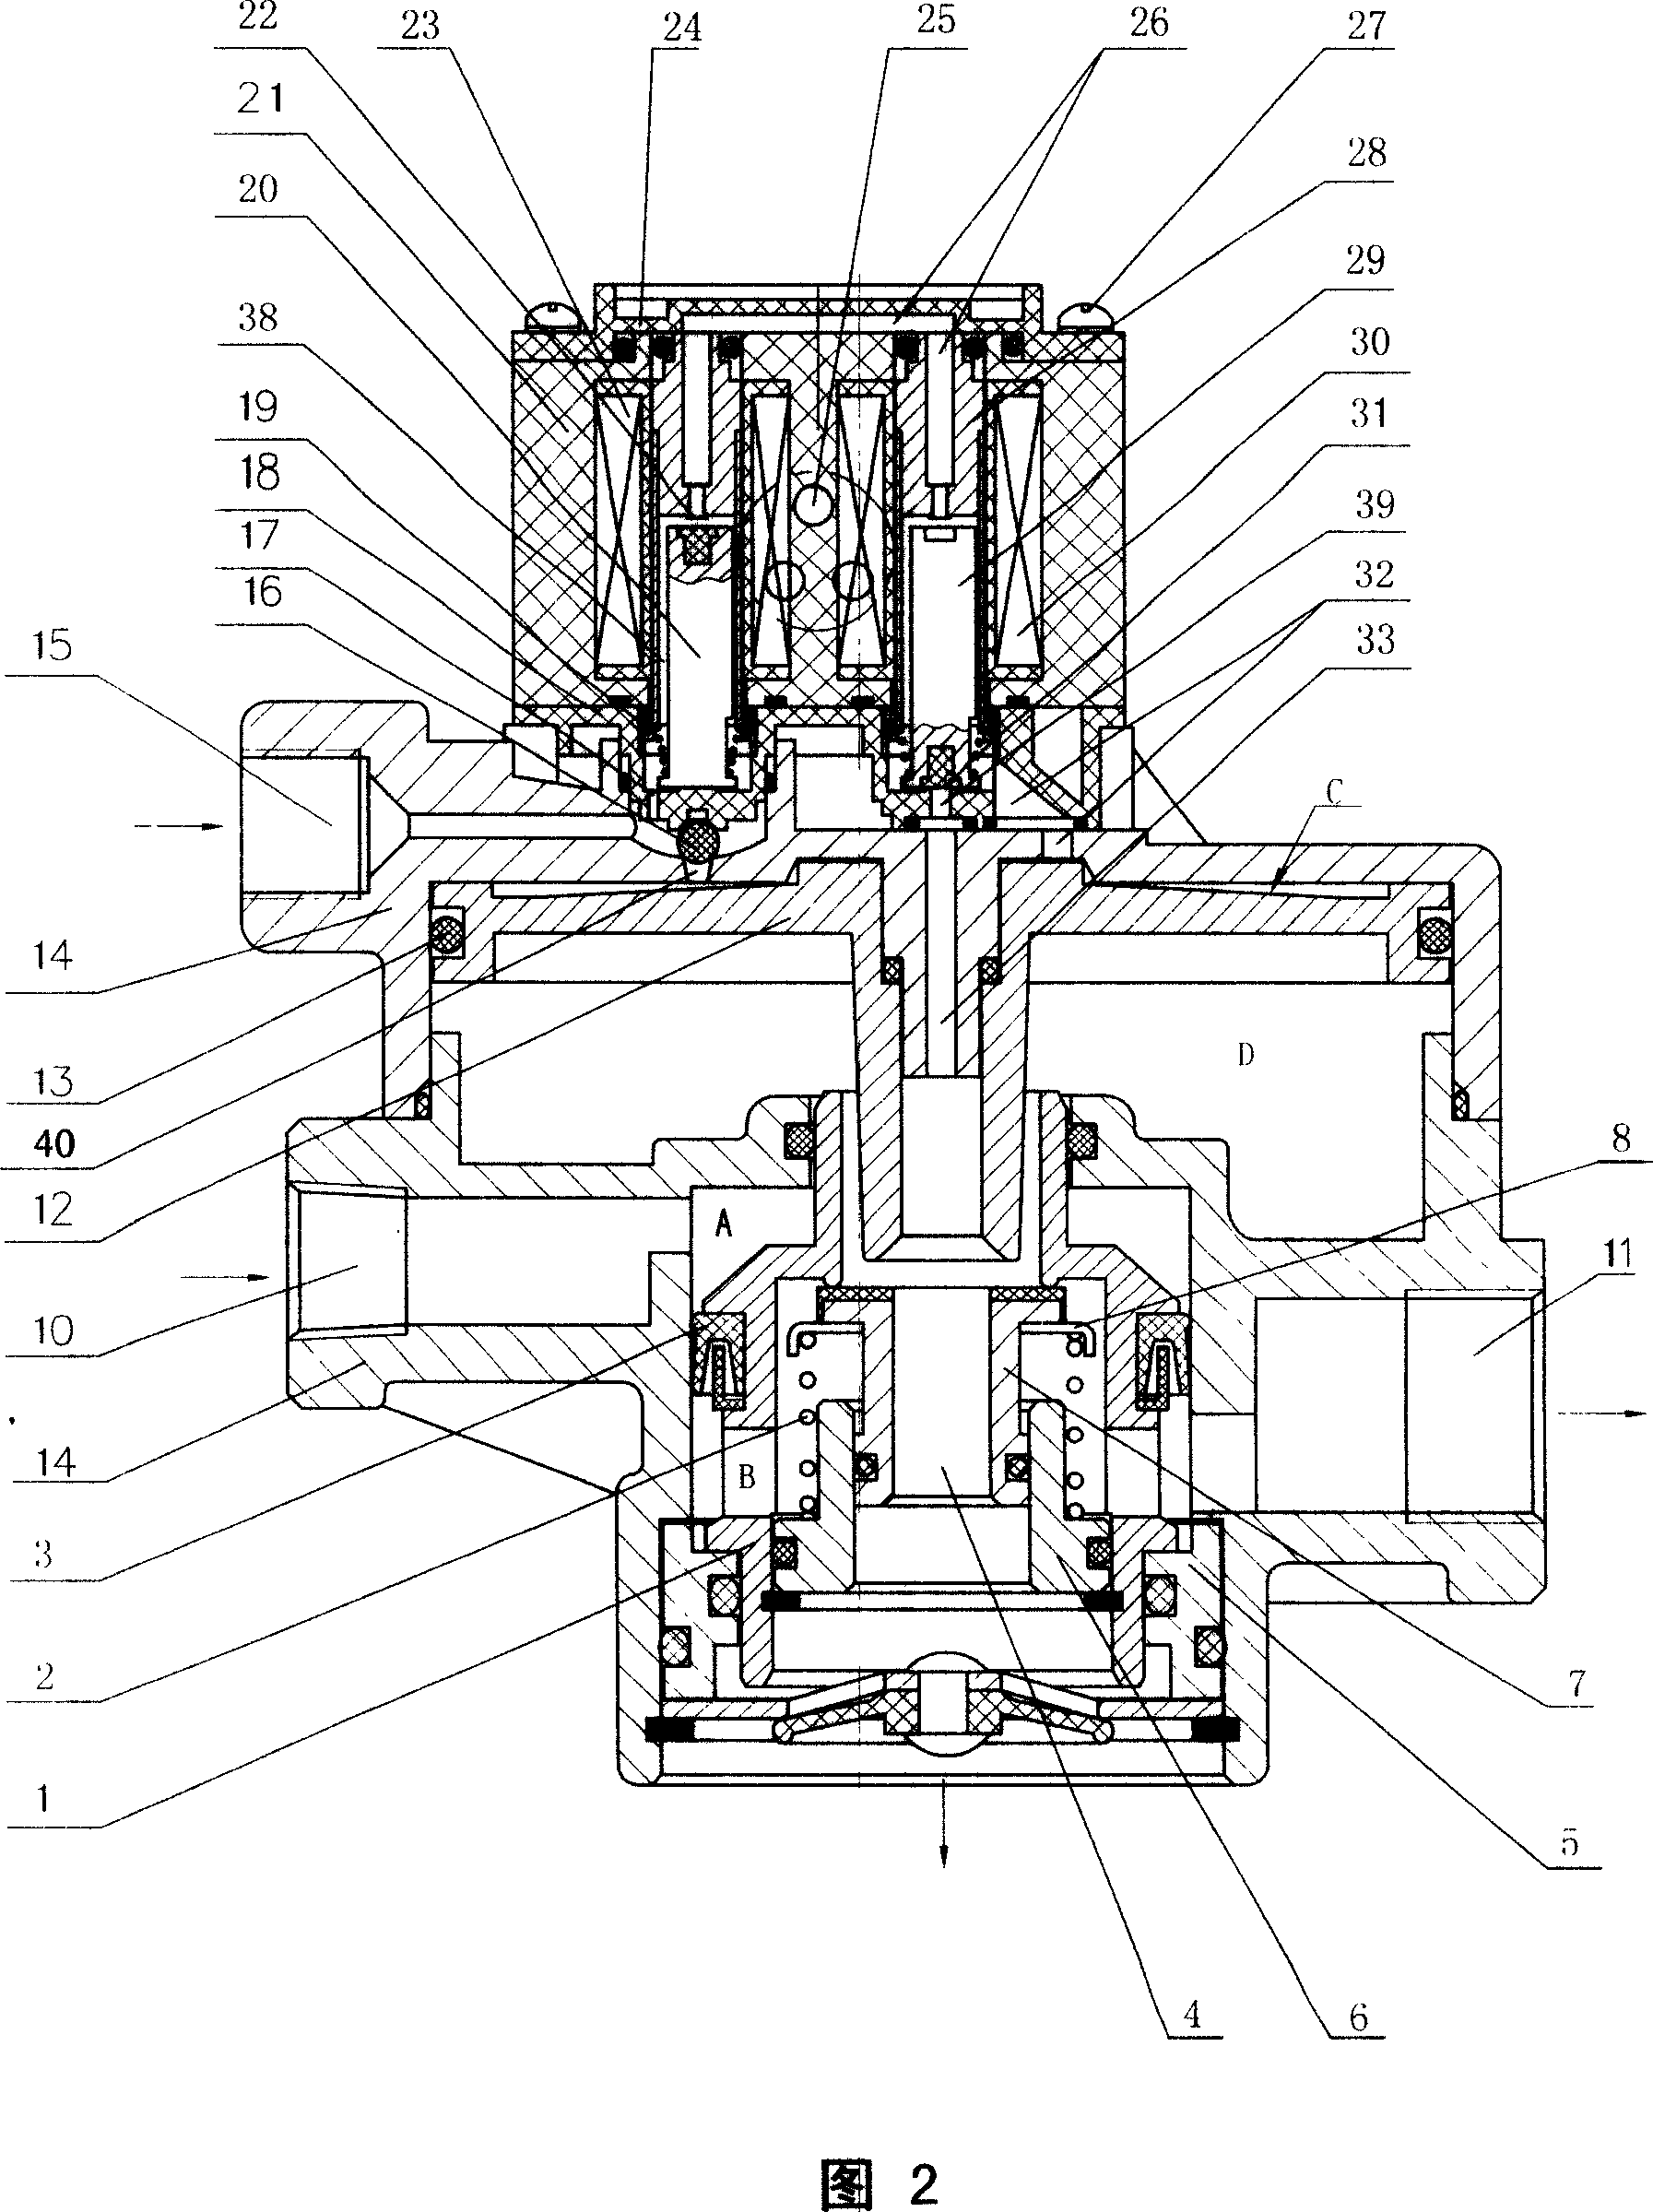 ABS emergency relay valve